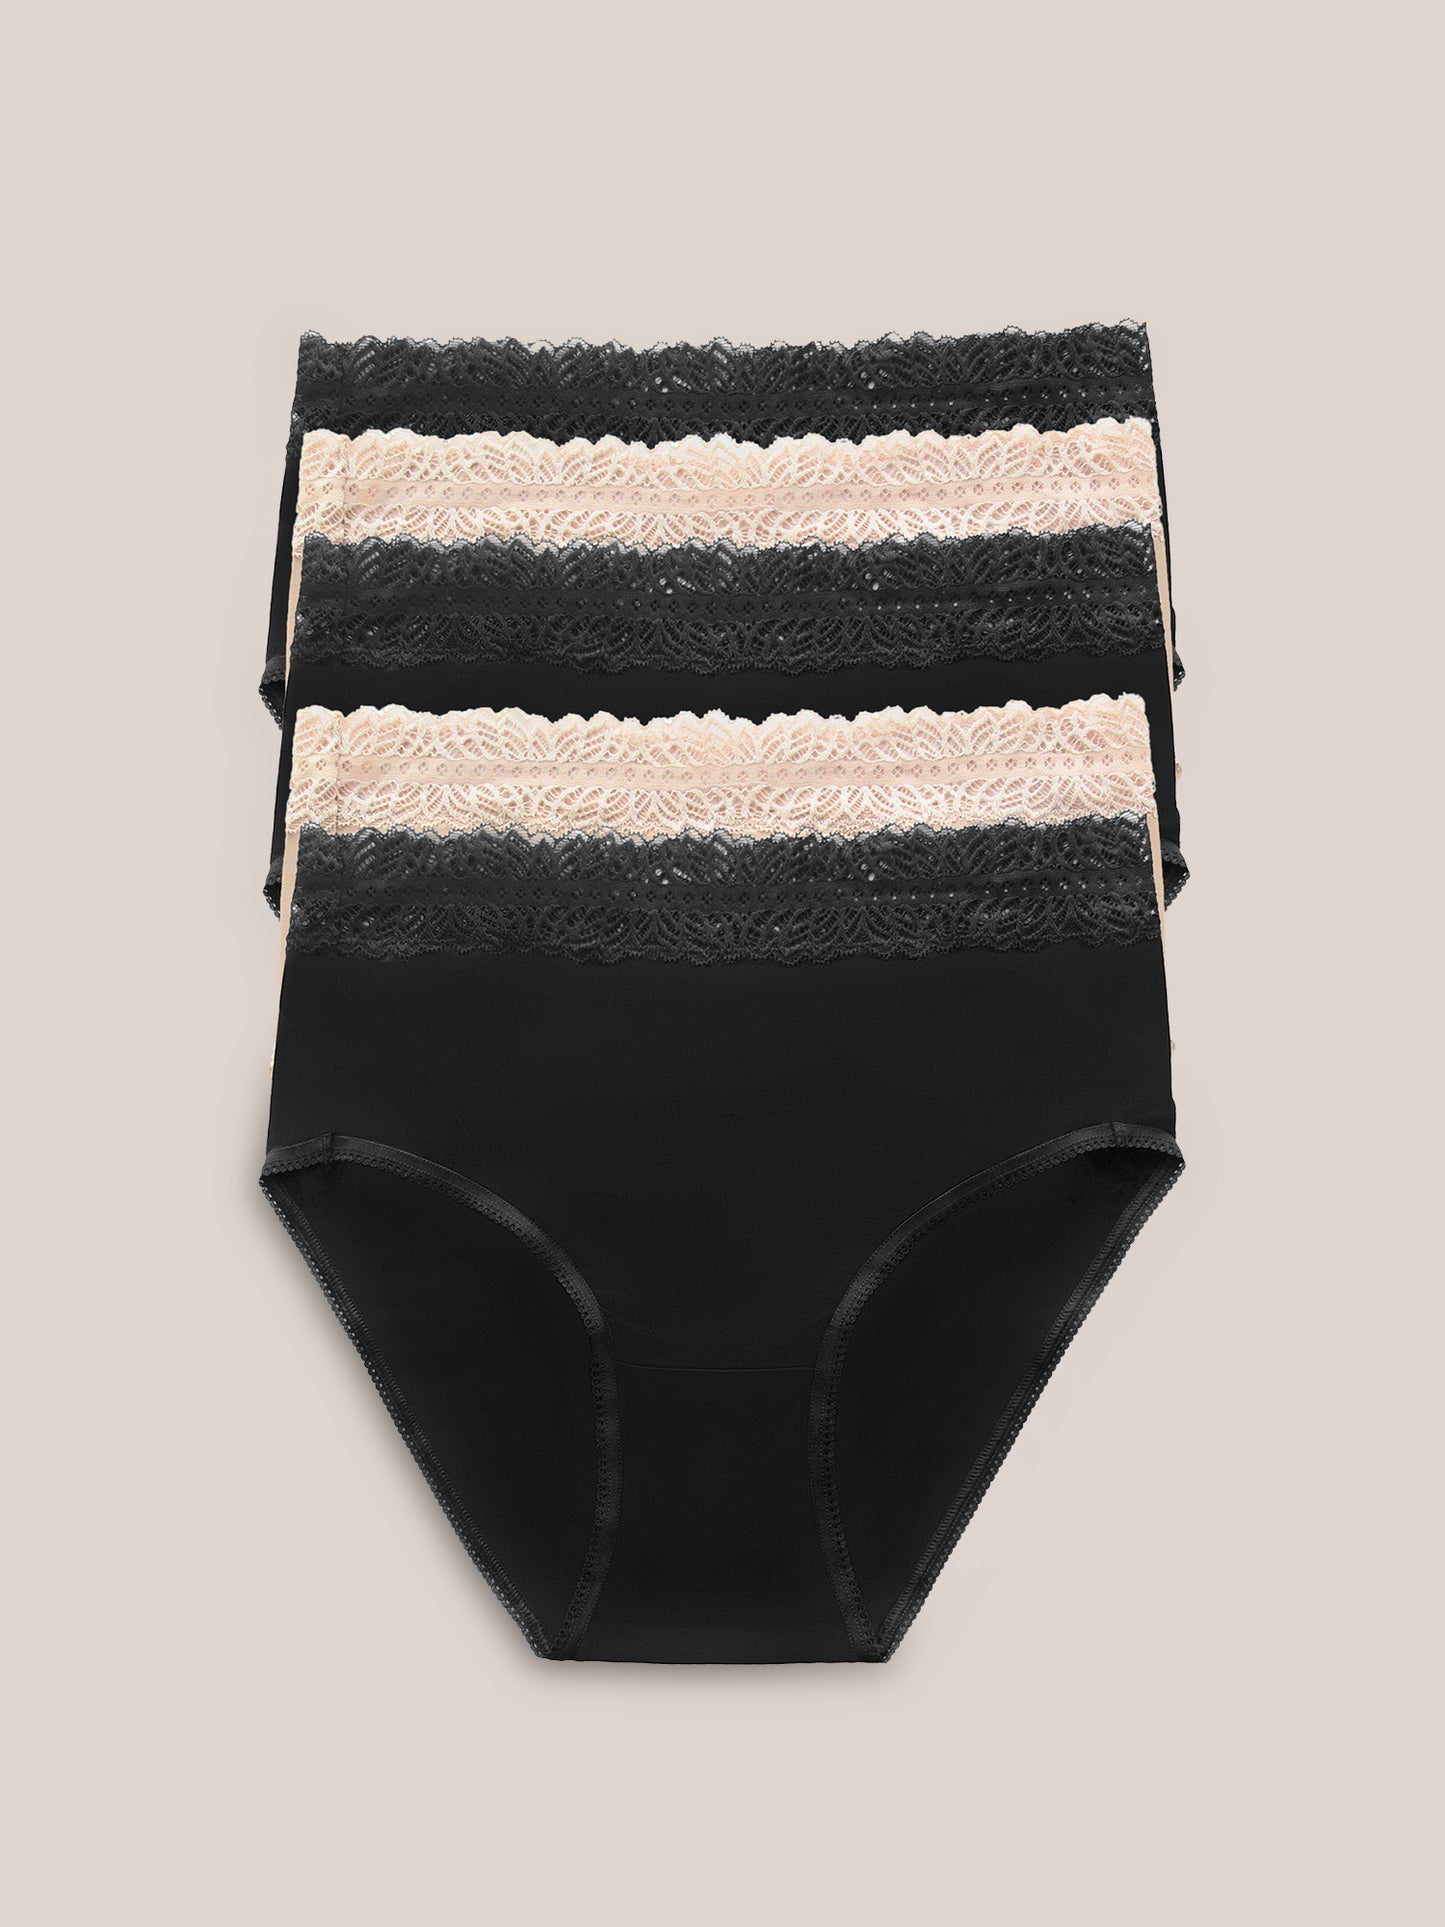 High-Waisted Postpartum Underwear in Dusty Hues (5-Pack) – Hello Postpartum